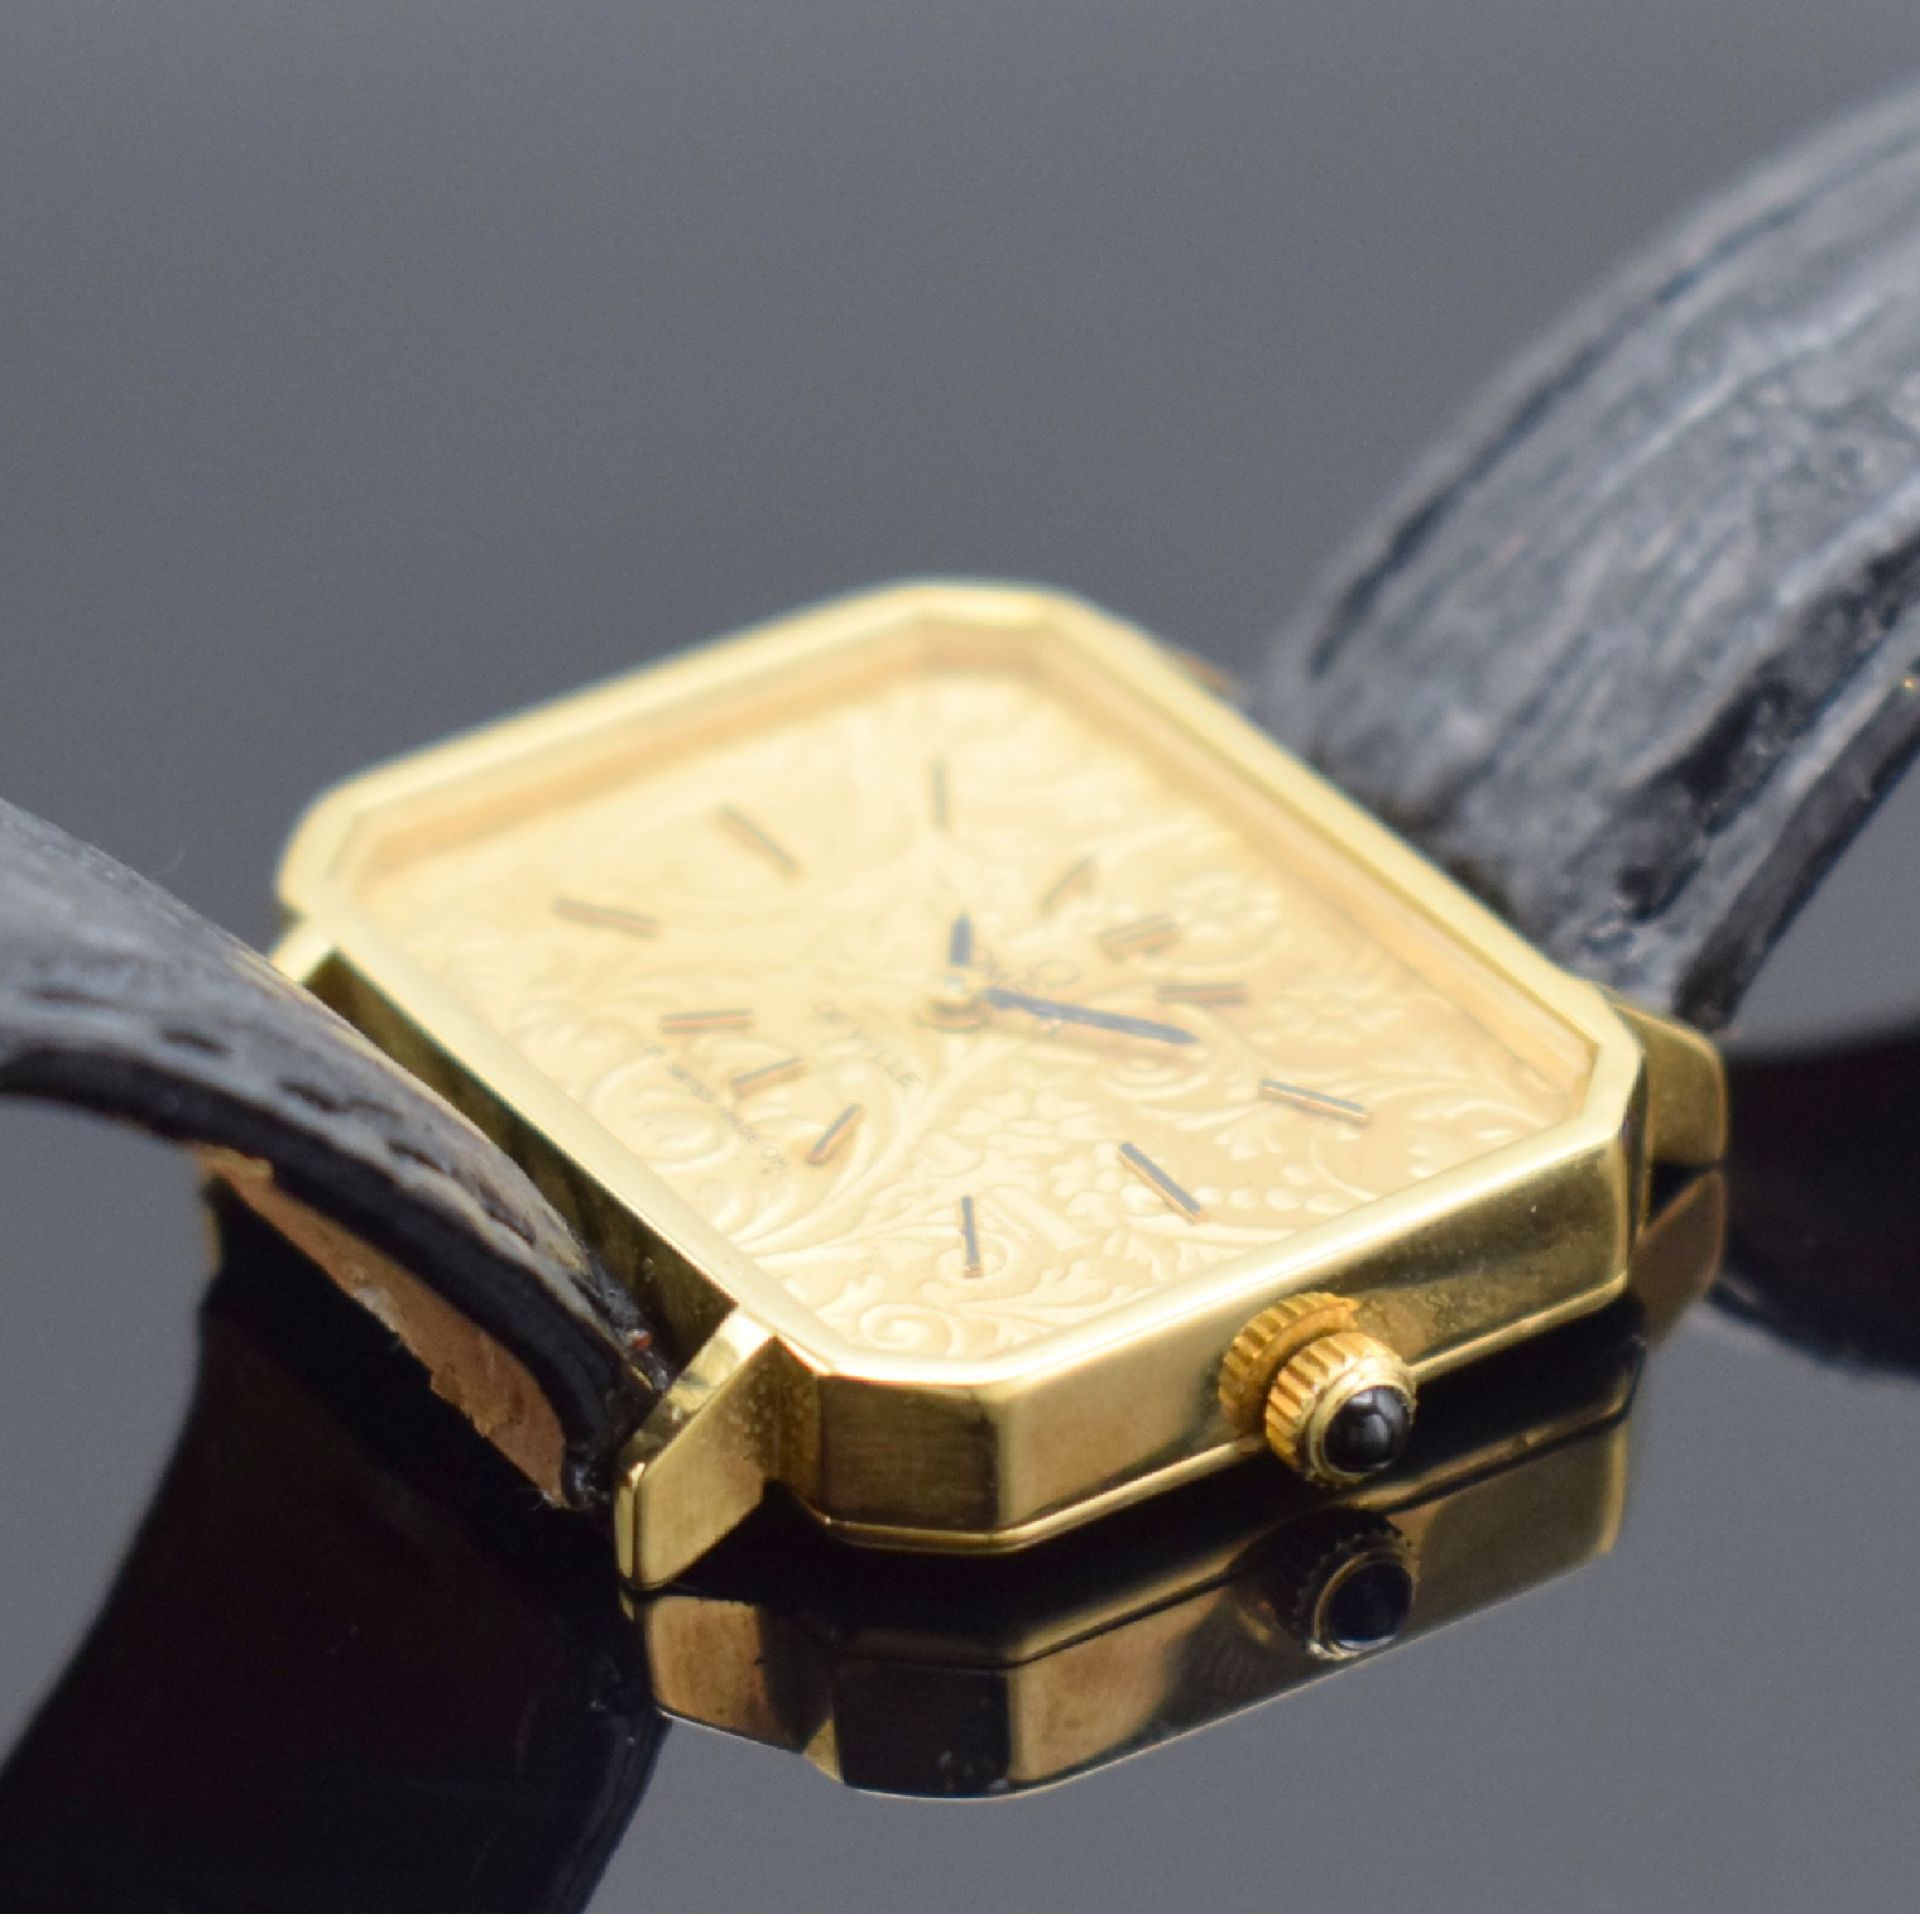 OMEGA Emeraude seltene Armbanduhr in GG 750/000 designed - Bild 3 aus 7